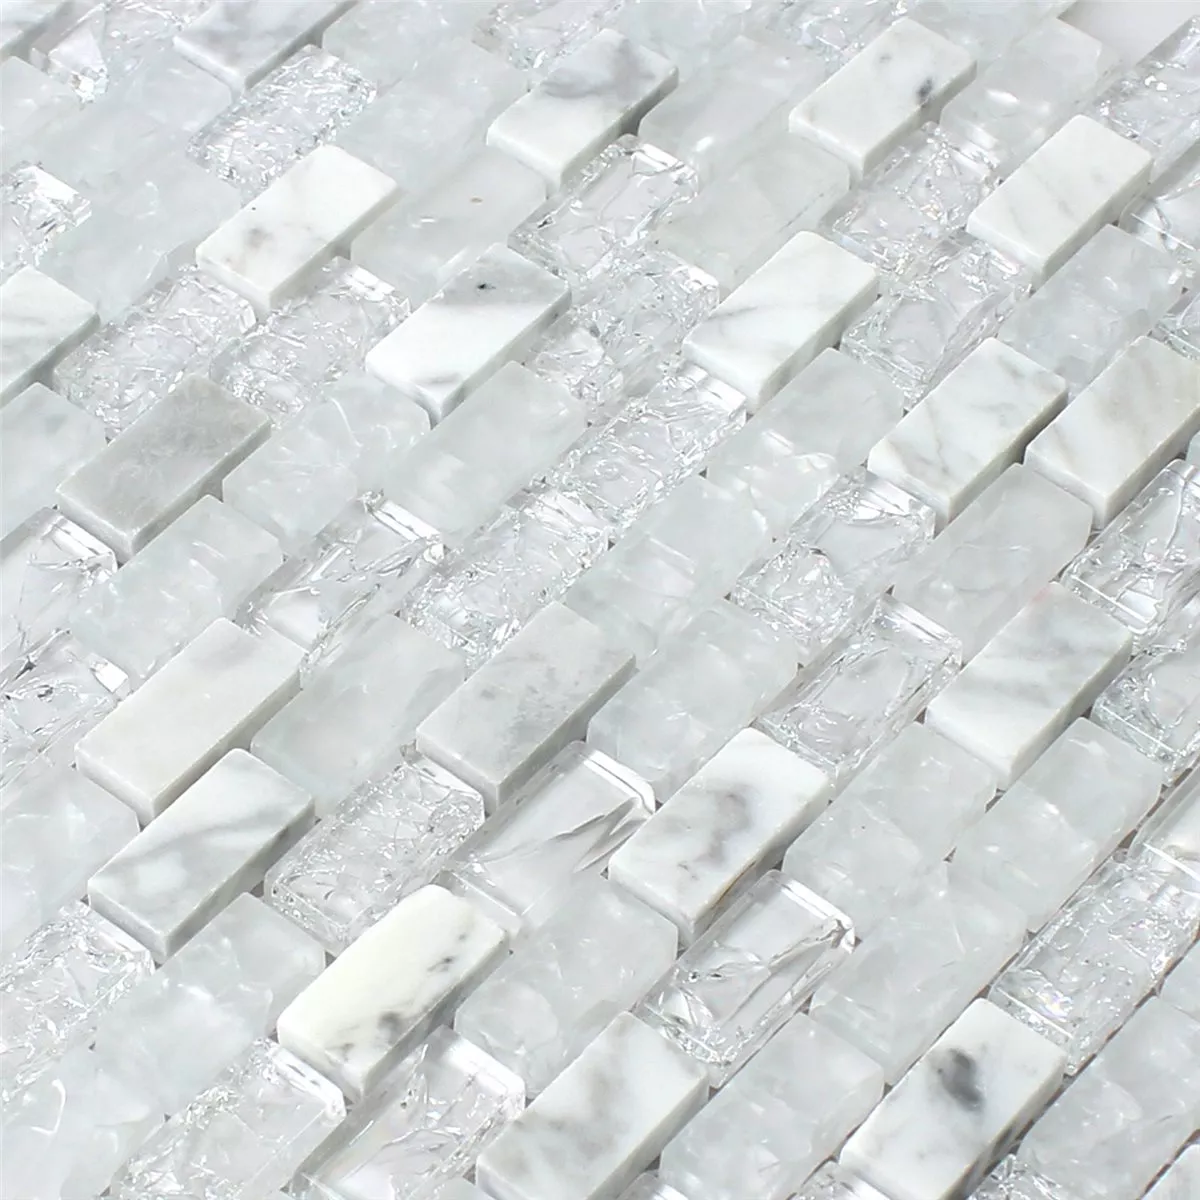 Sample Mosaic Tiles Glass Natural Stone Broken White Effect Brick